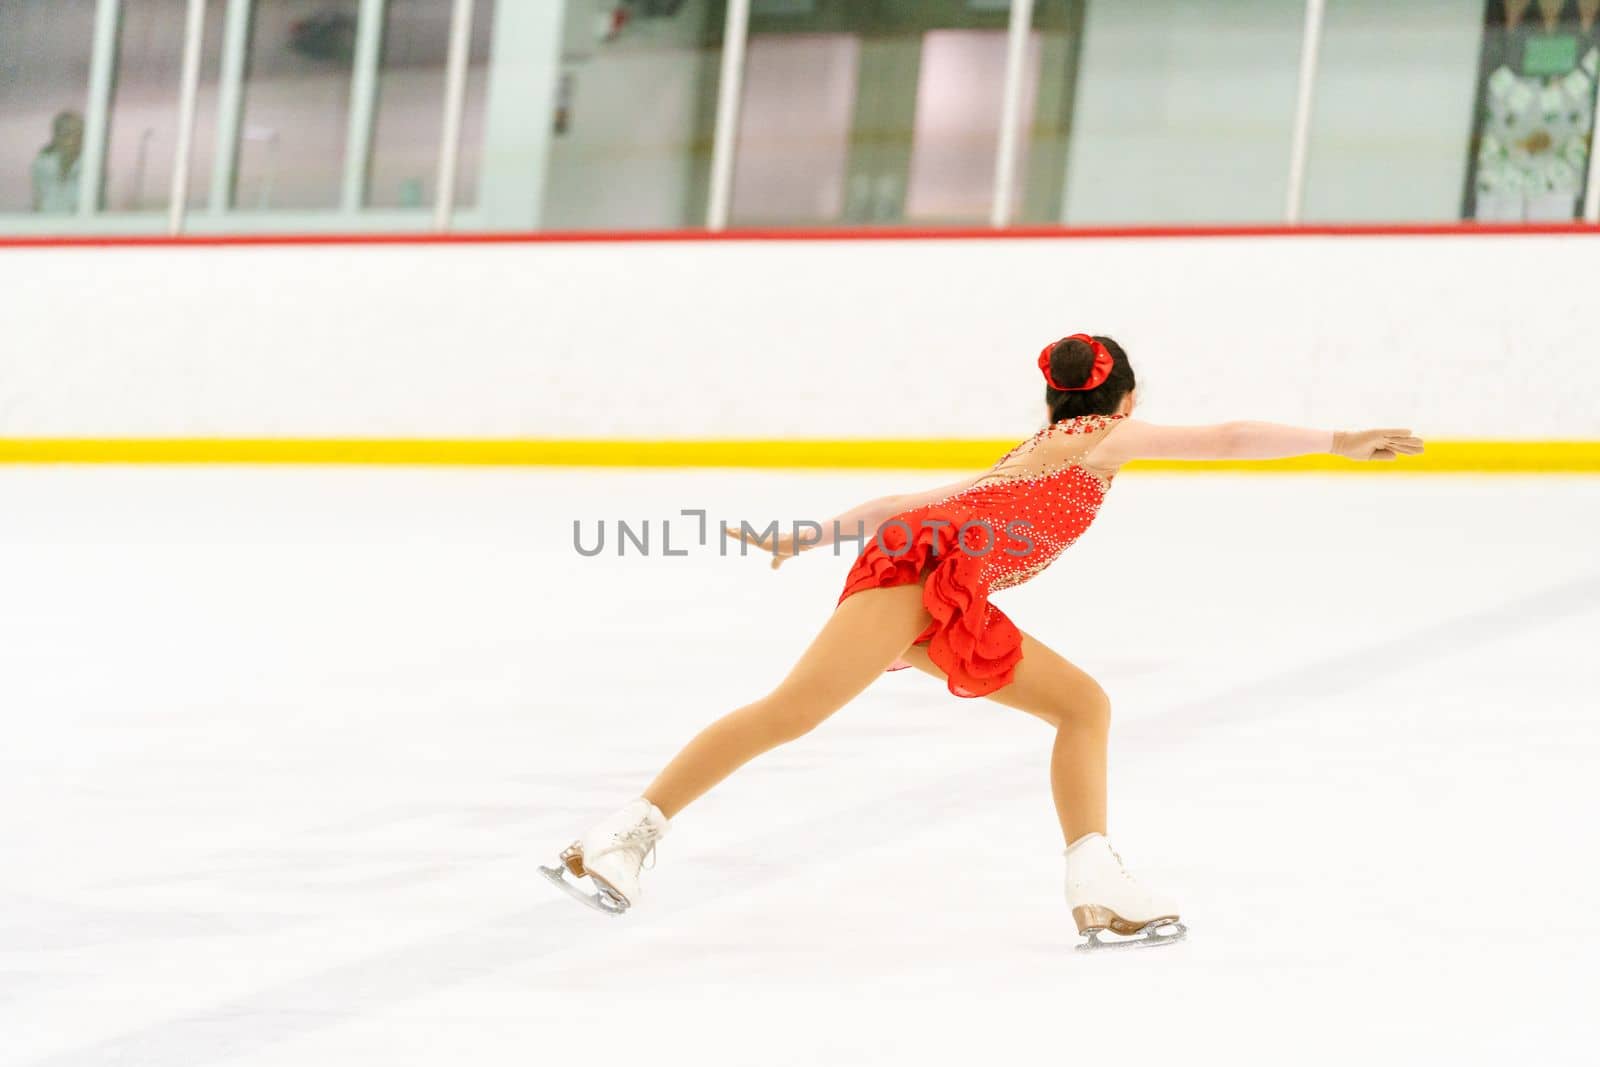 Teenage girl practicing figure skating on an indoor ice skating rink.